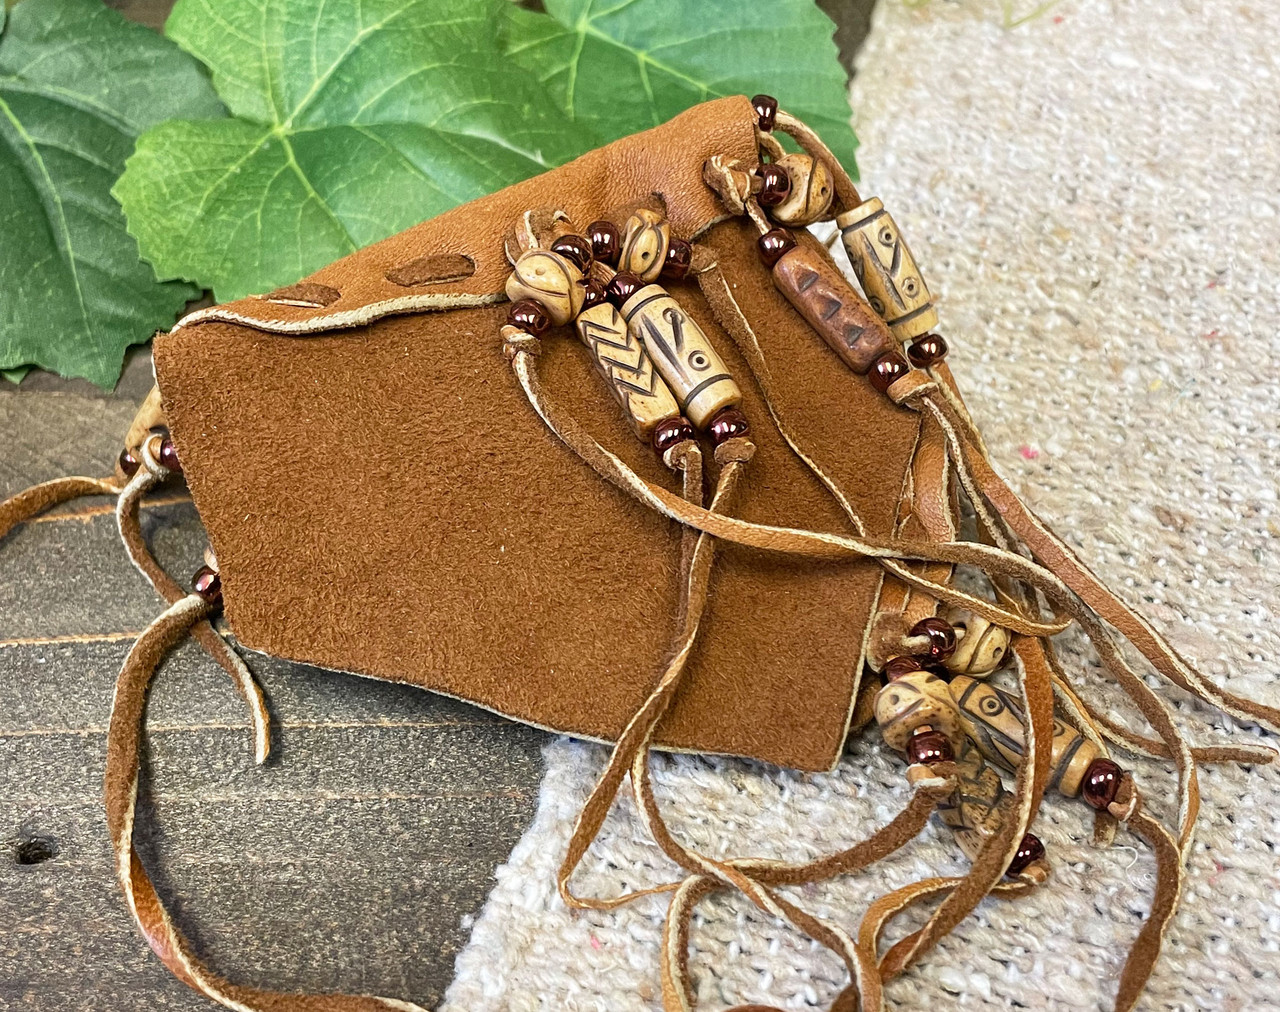 B8 Western Leather & Cowhide Handbag